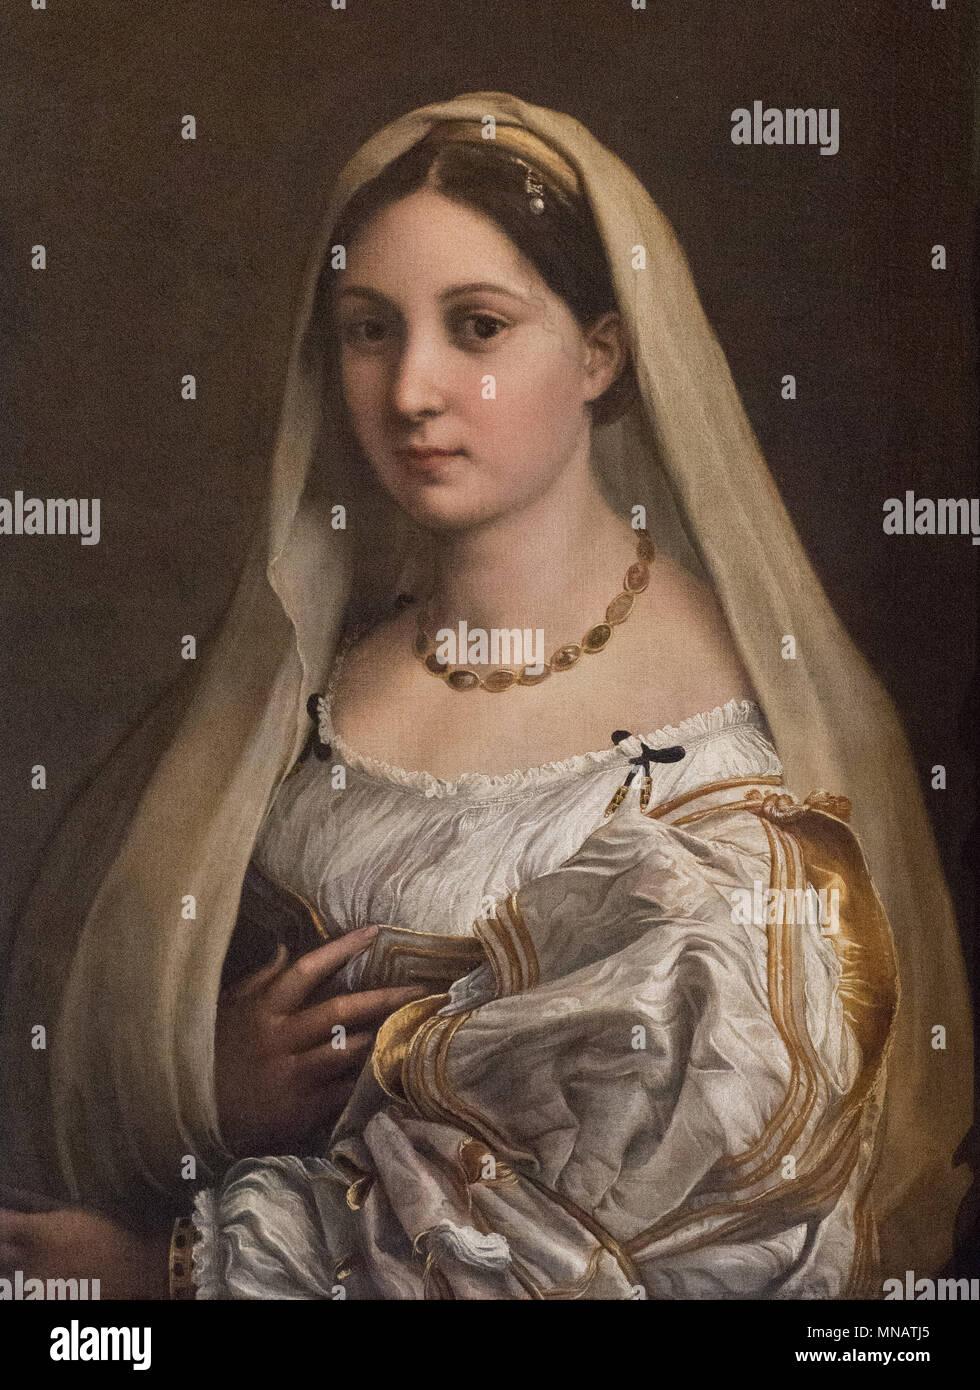 Raffaello Sanzio  - Portrait of a Veiled woman 16th century   - Gallery Pitti Palace Florence Italy Stock Photo